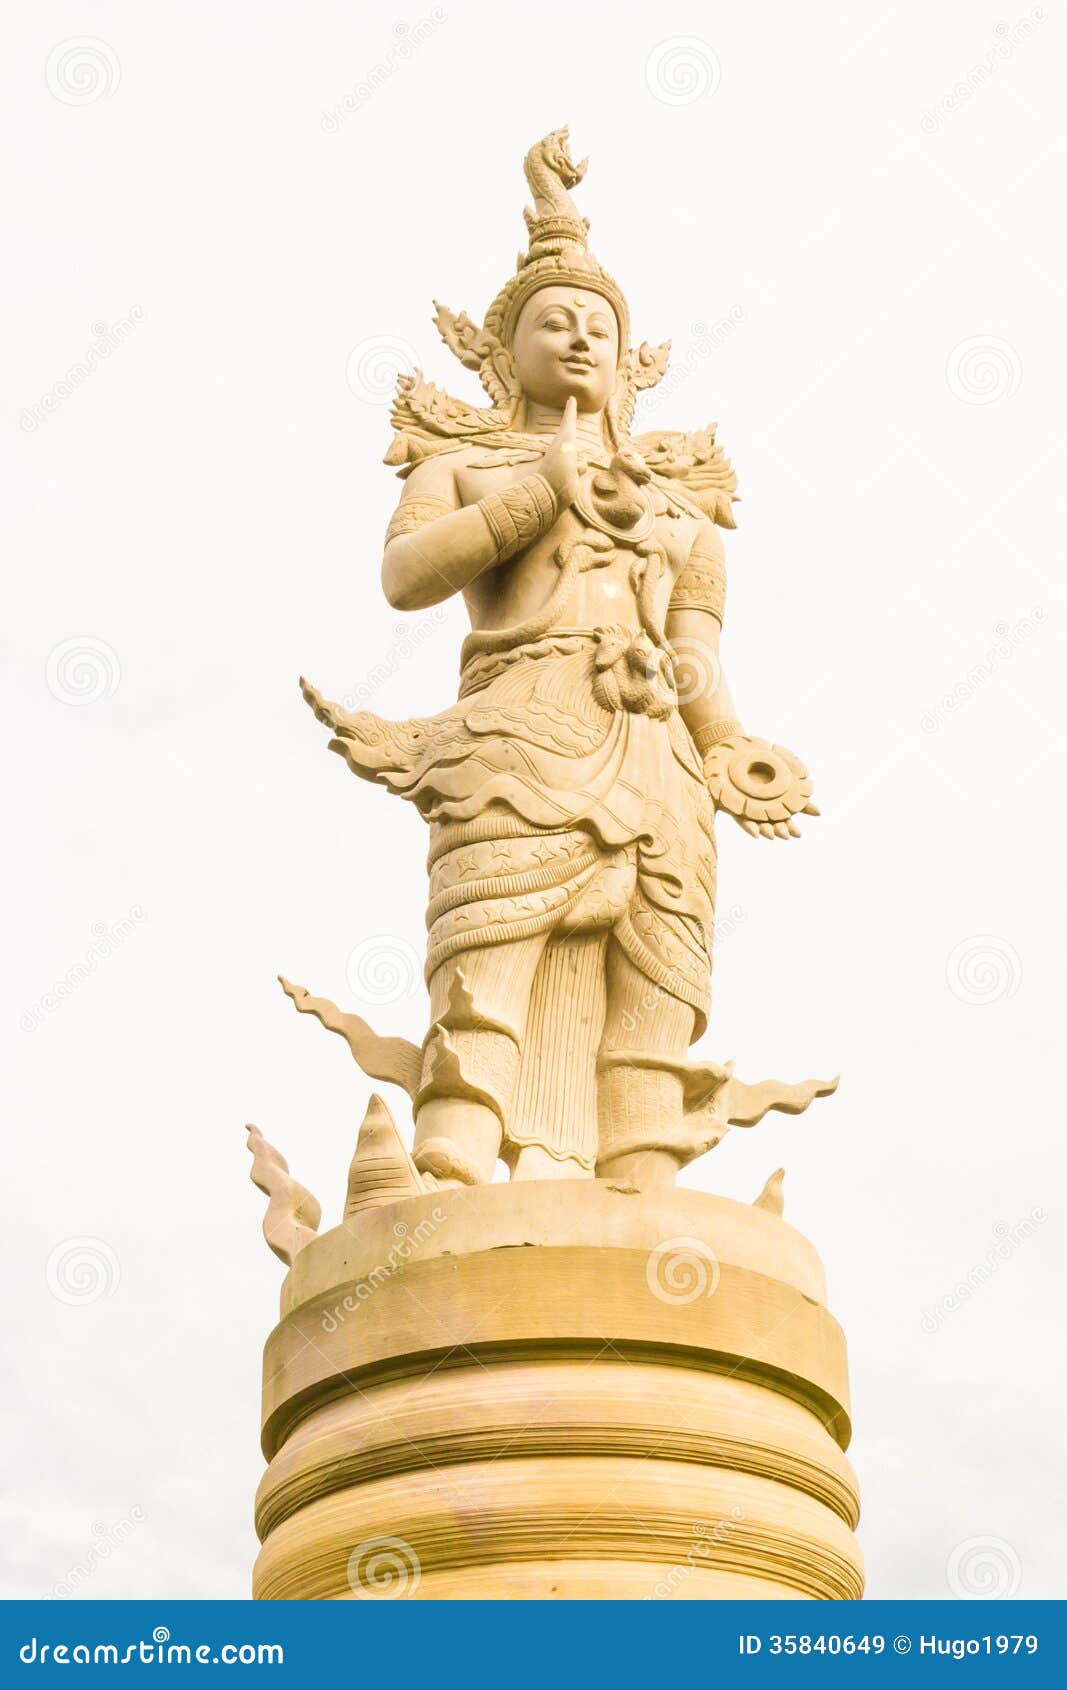 On White of Thai Style Angel Stock Image - Image of angel, golden: 35840649